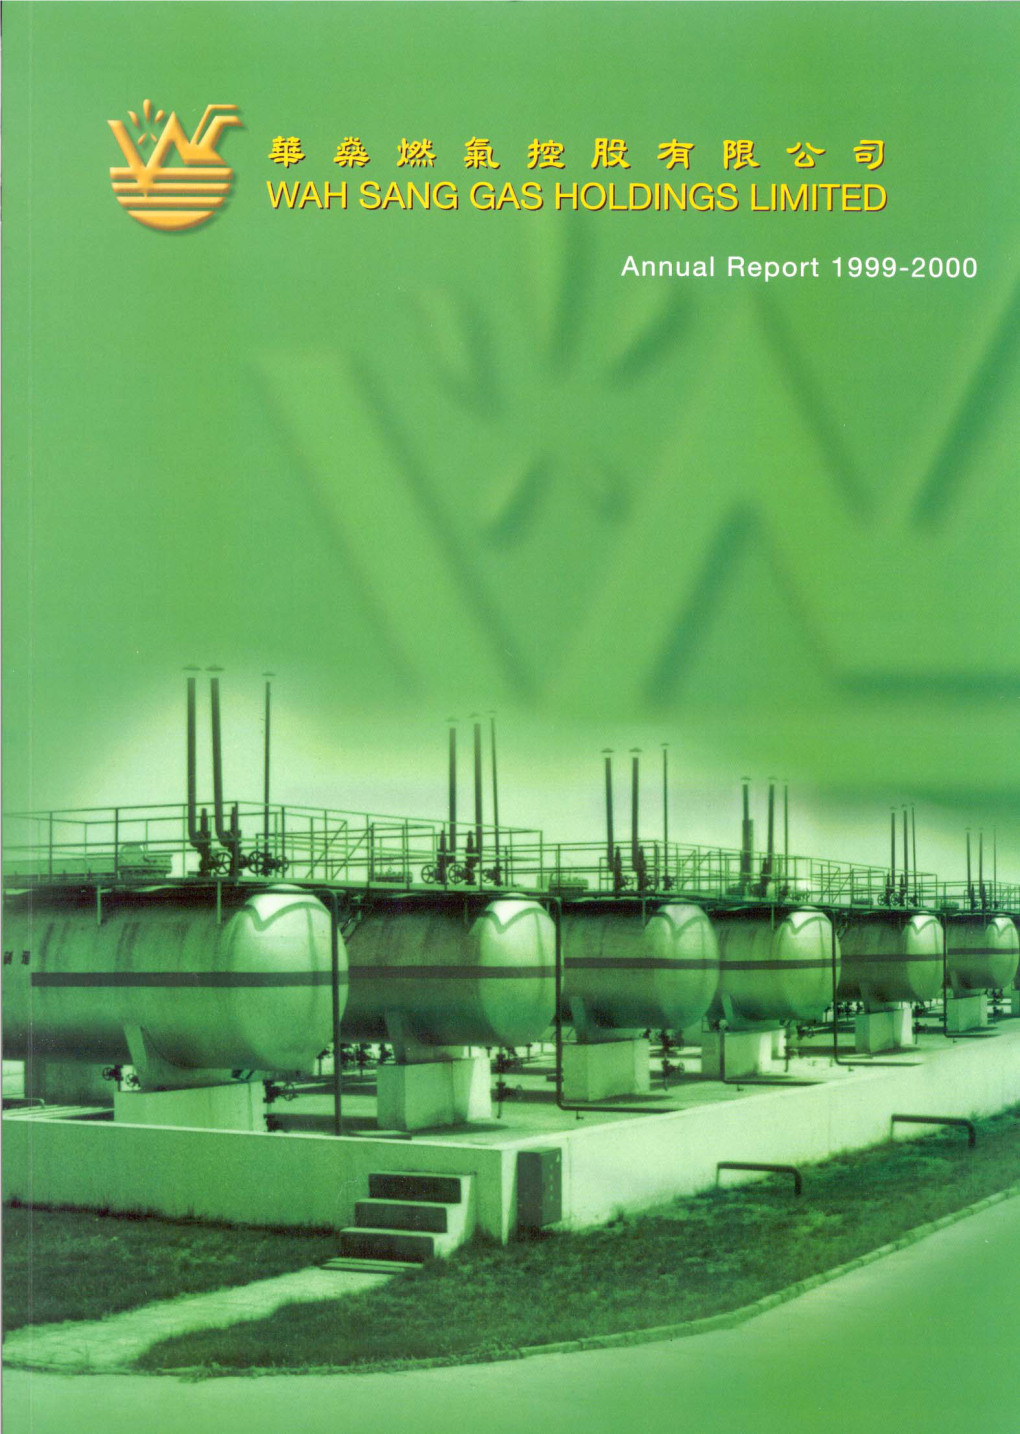 Annual Report 2000 Corporate Structure